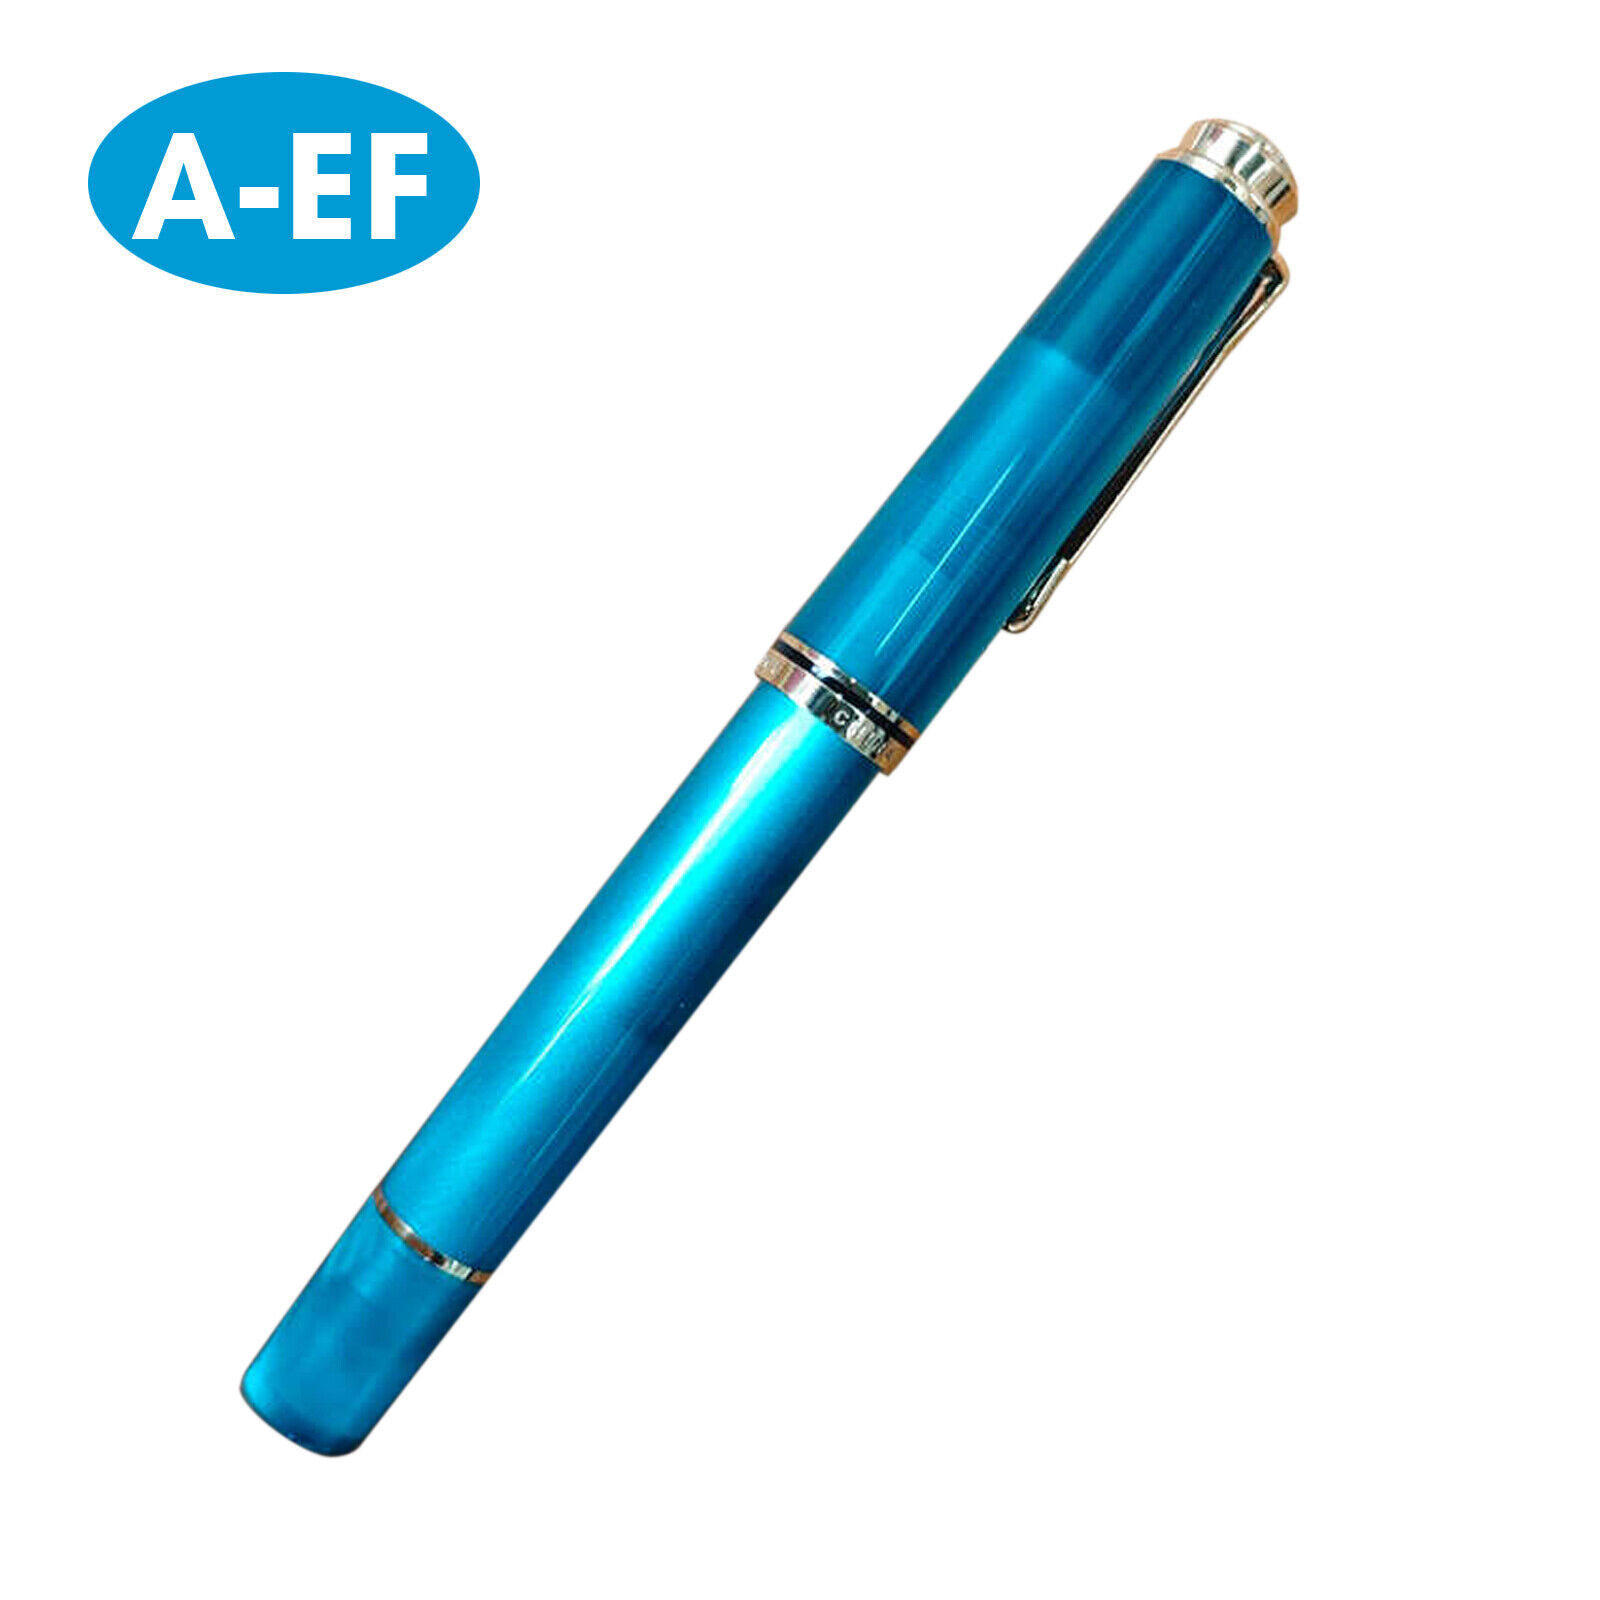 ADMOK 400 Acrylic Piston Fountain Pen Schmidt Soft Smooth #5 Nib EF/F/M NibM6Tkc